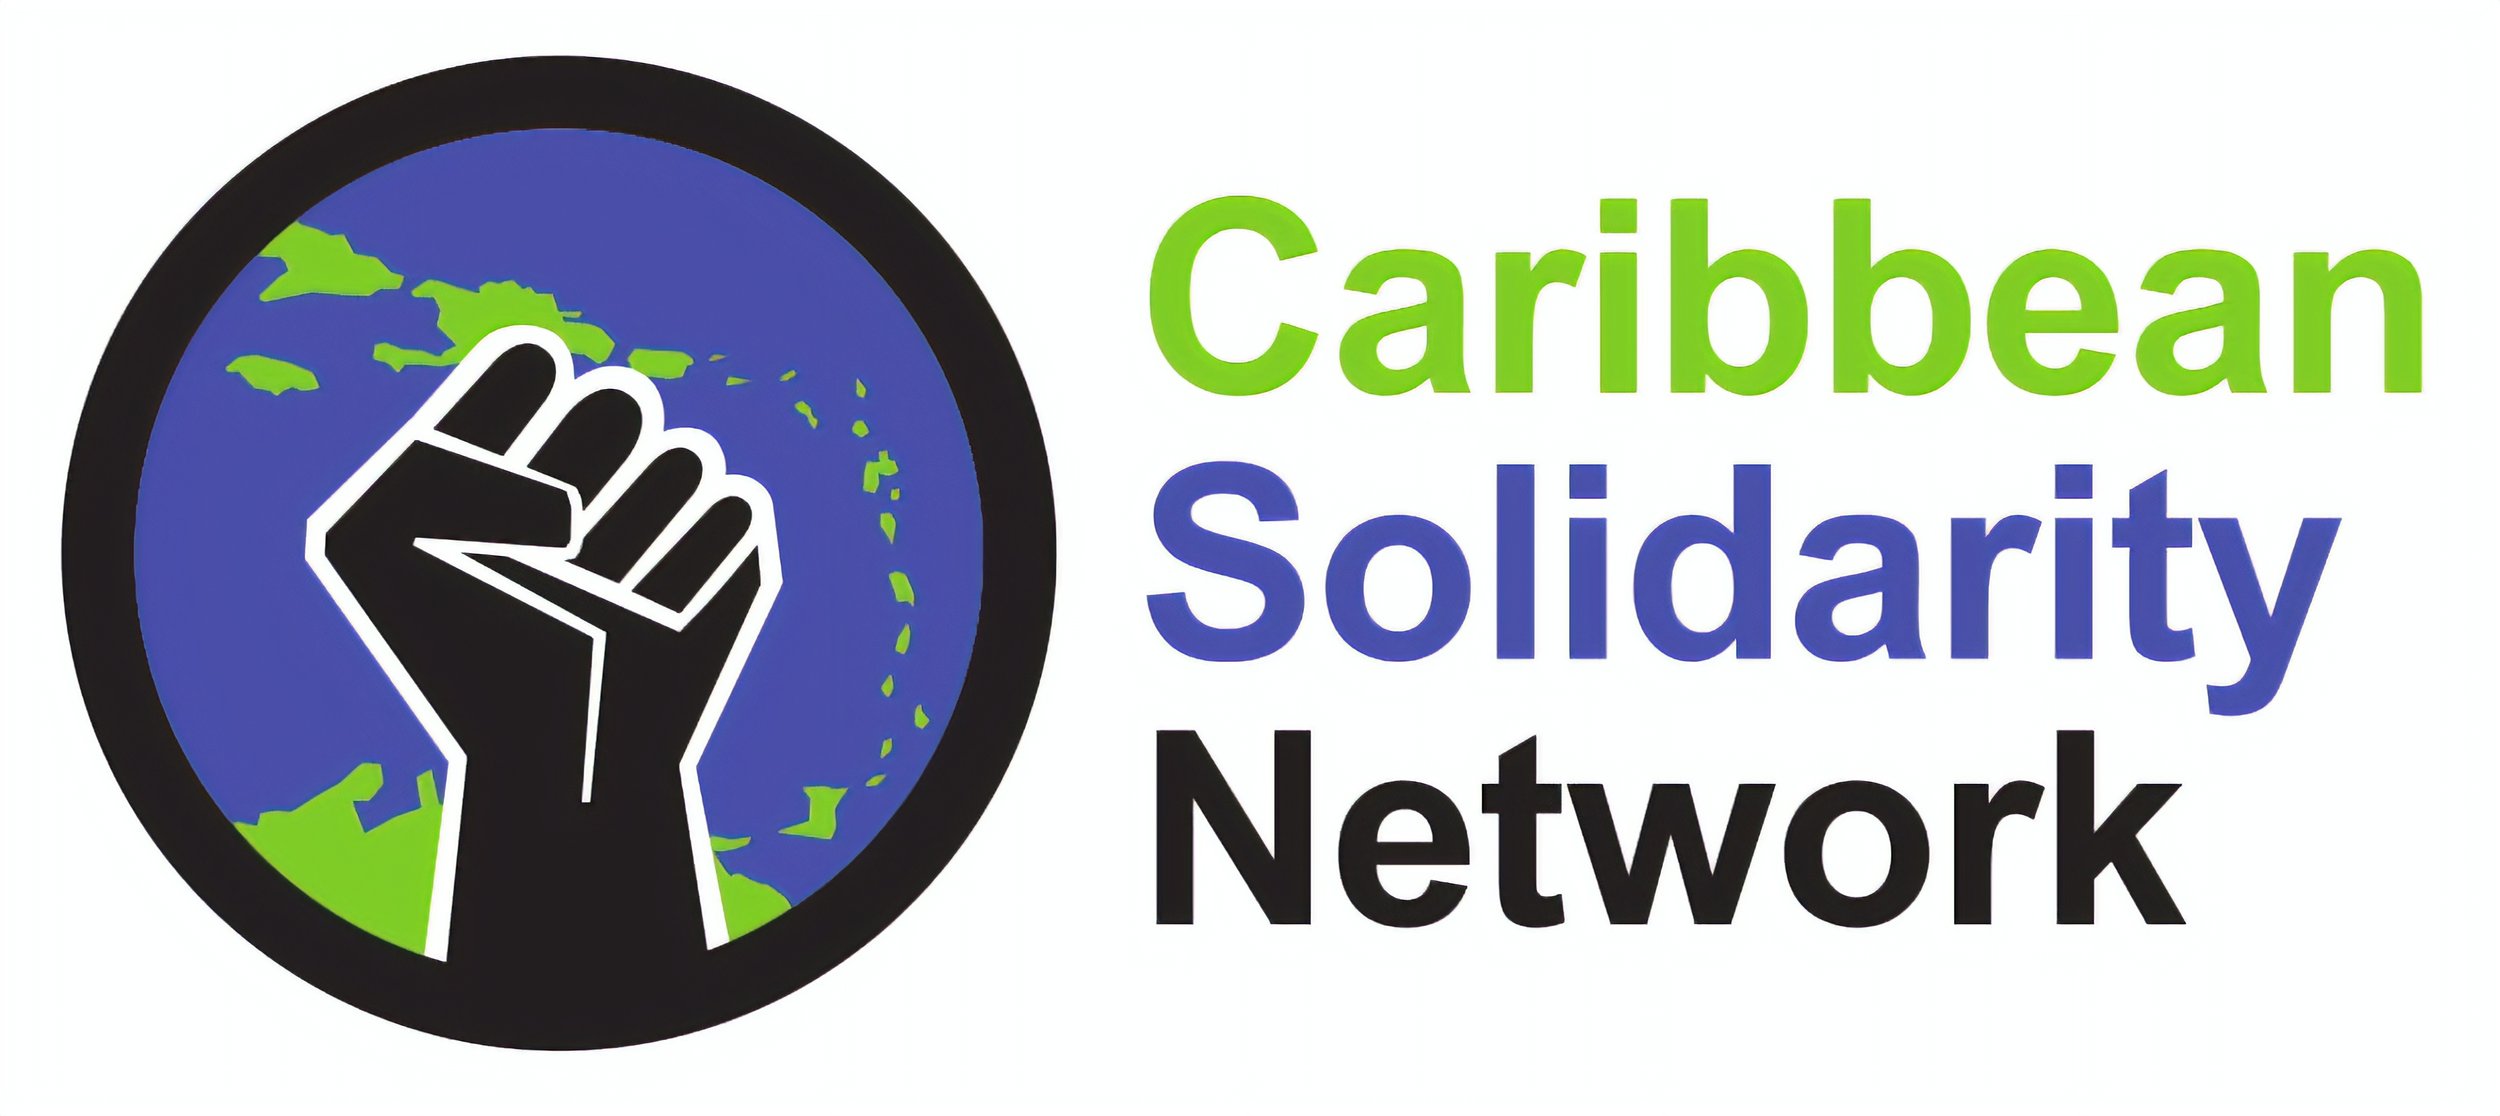 Caribbean Solidarity Network